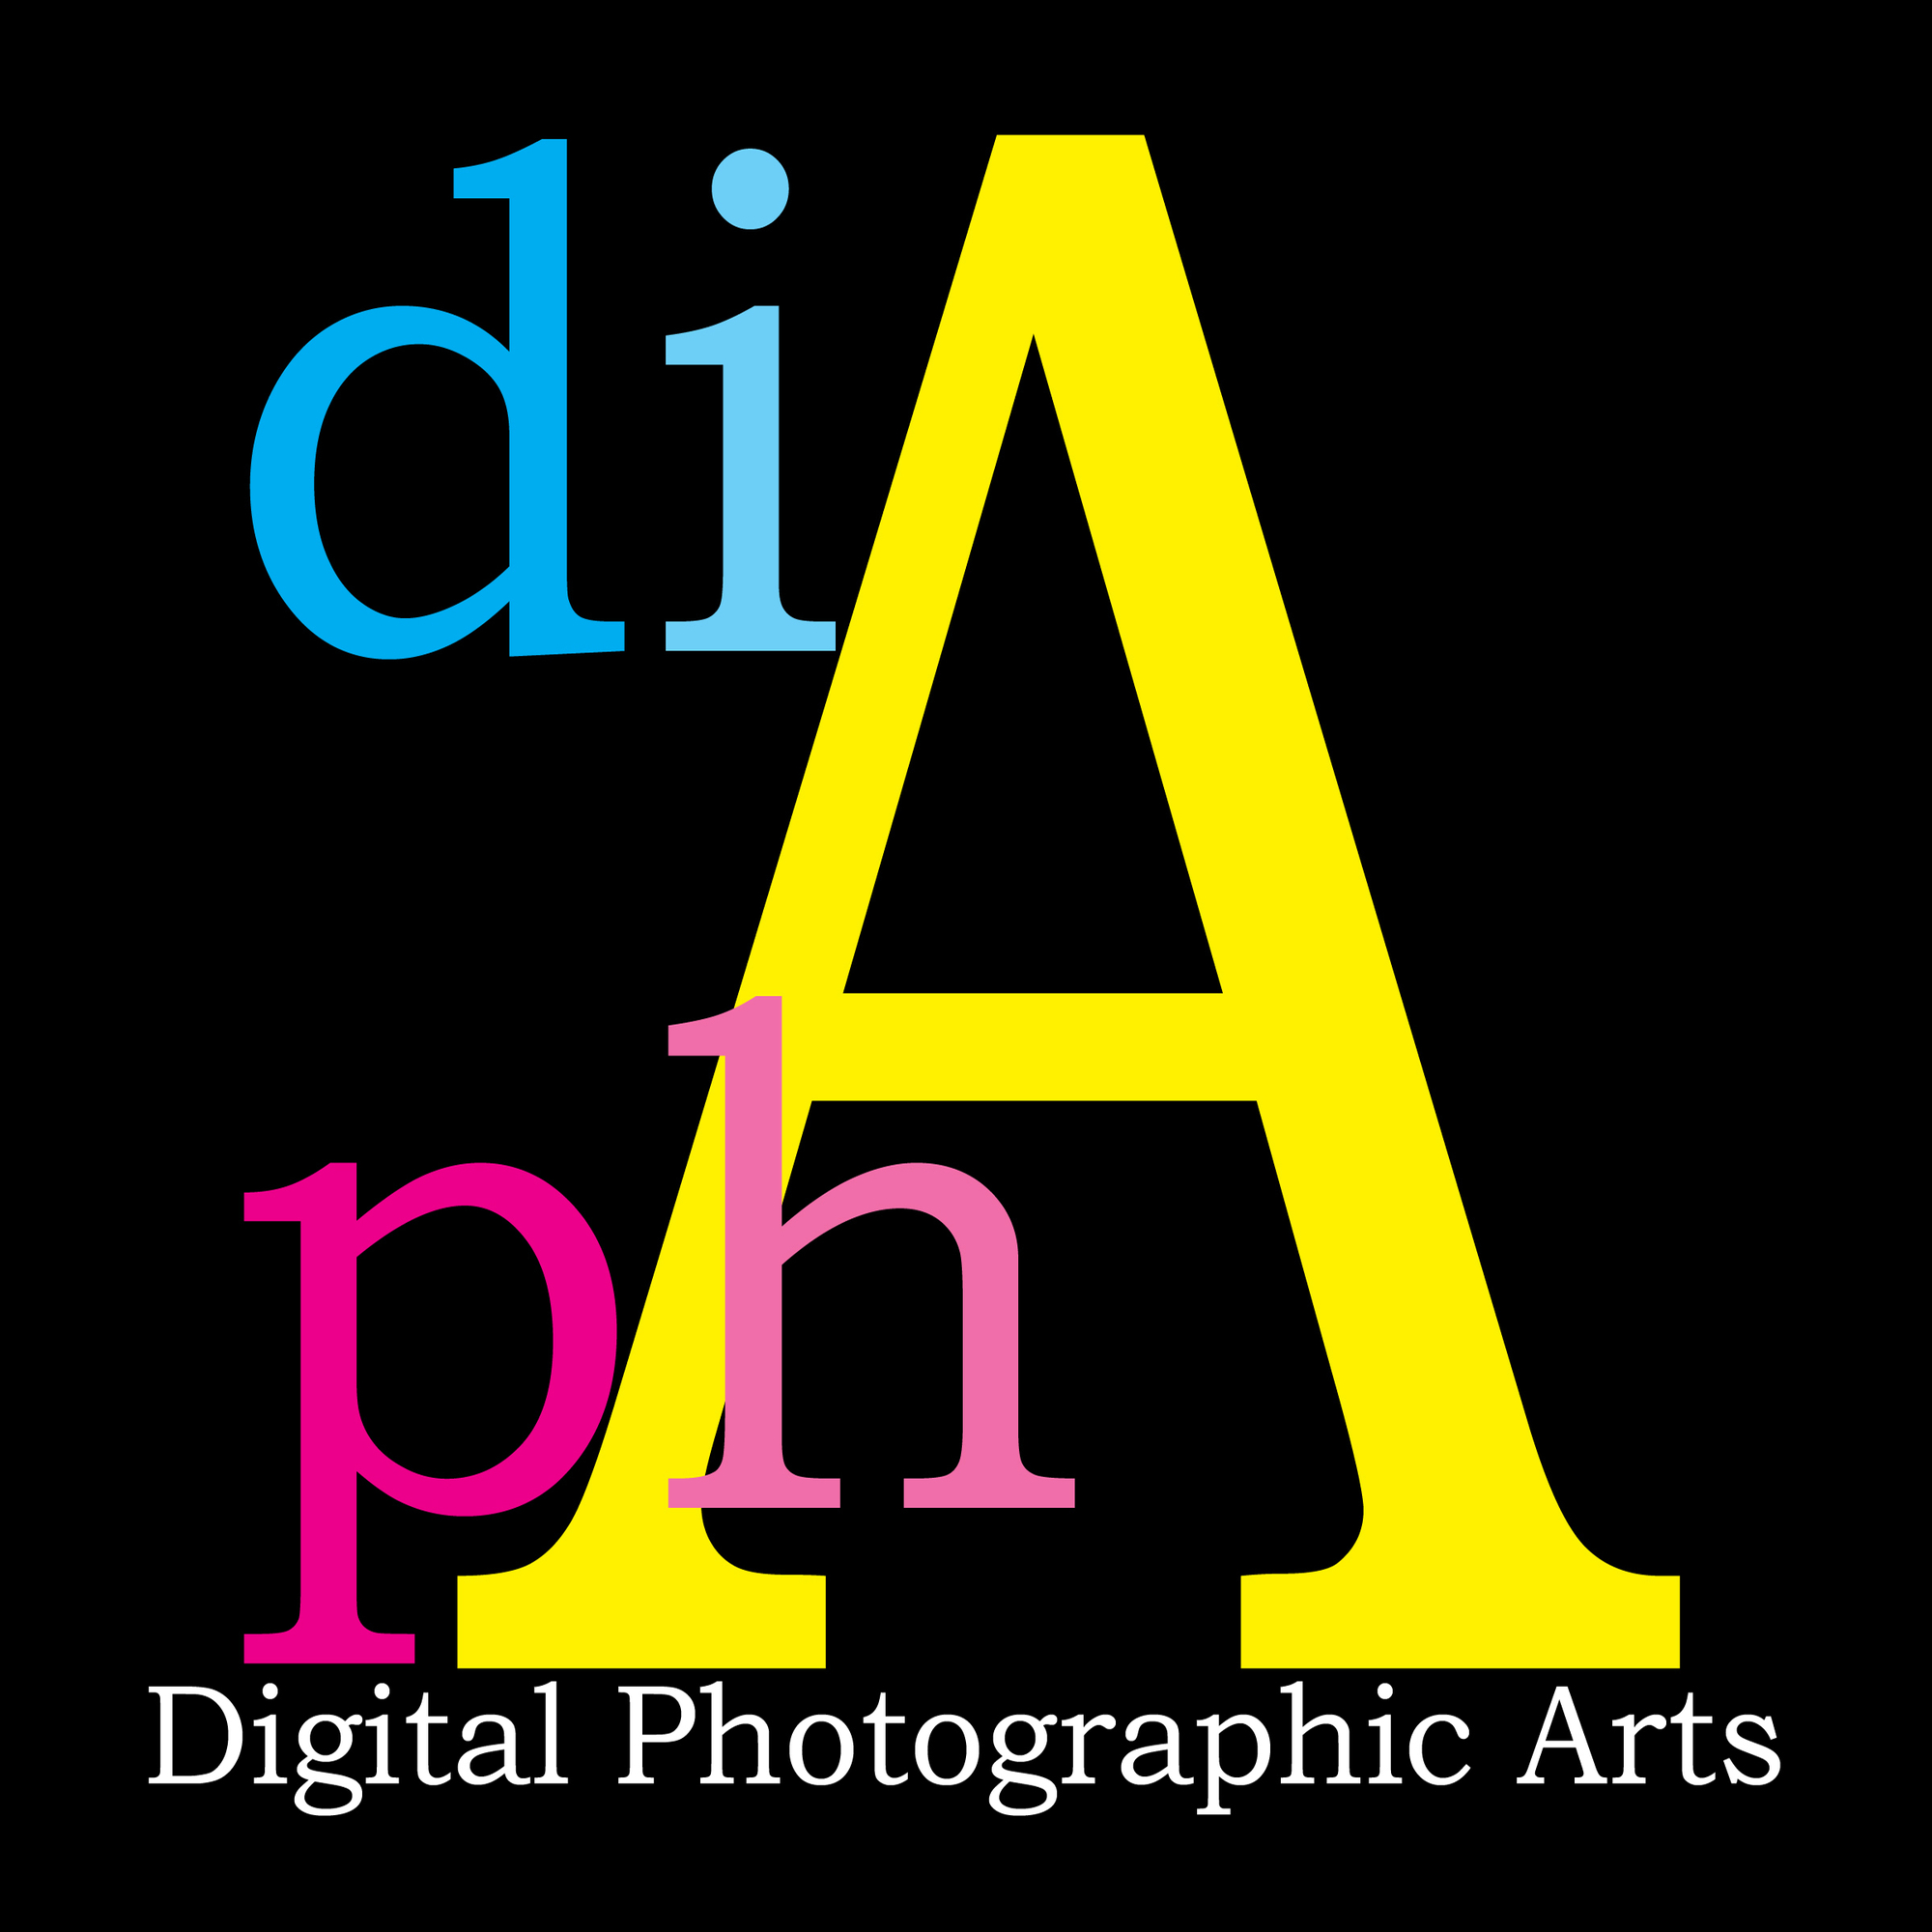 Digital Photographic Arts